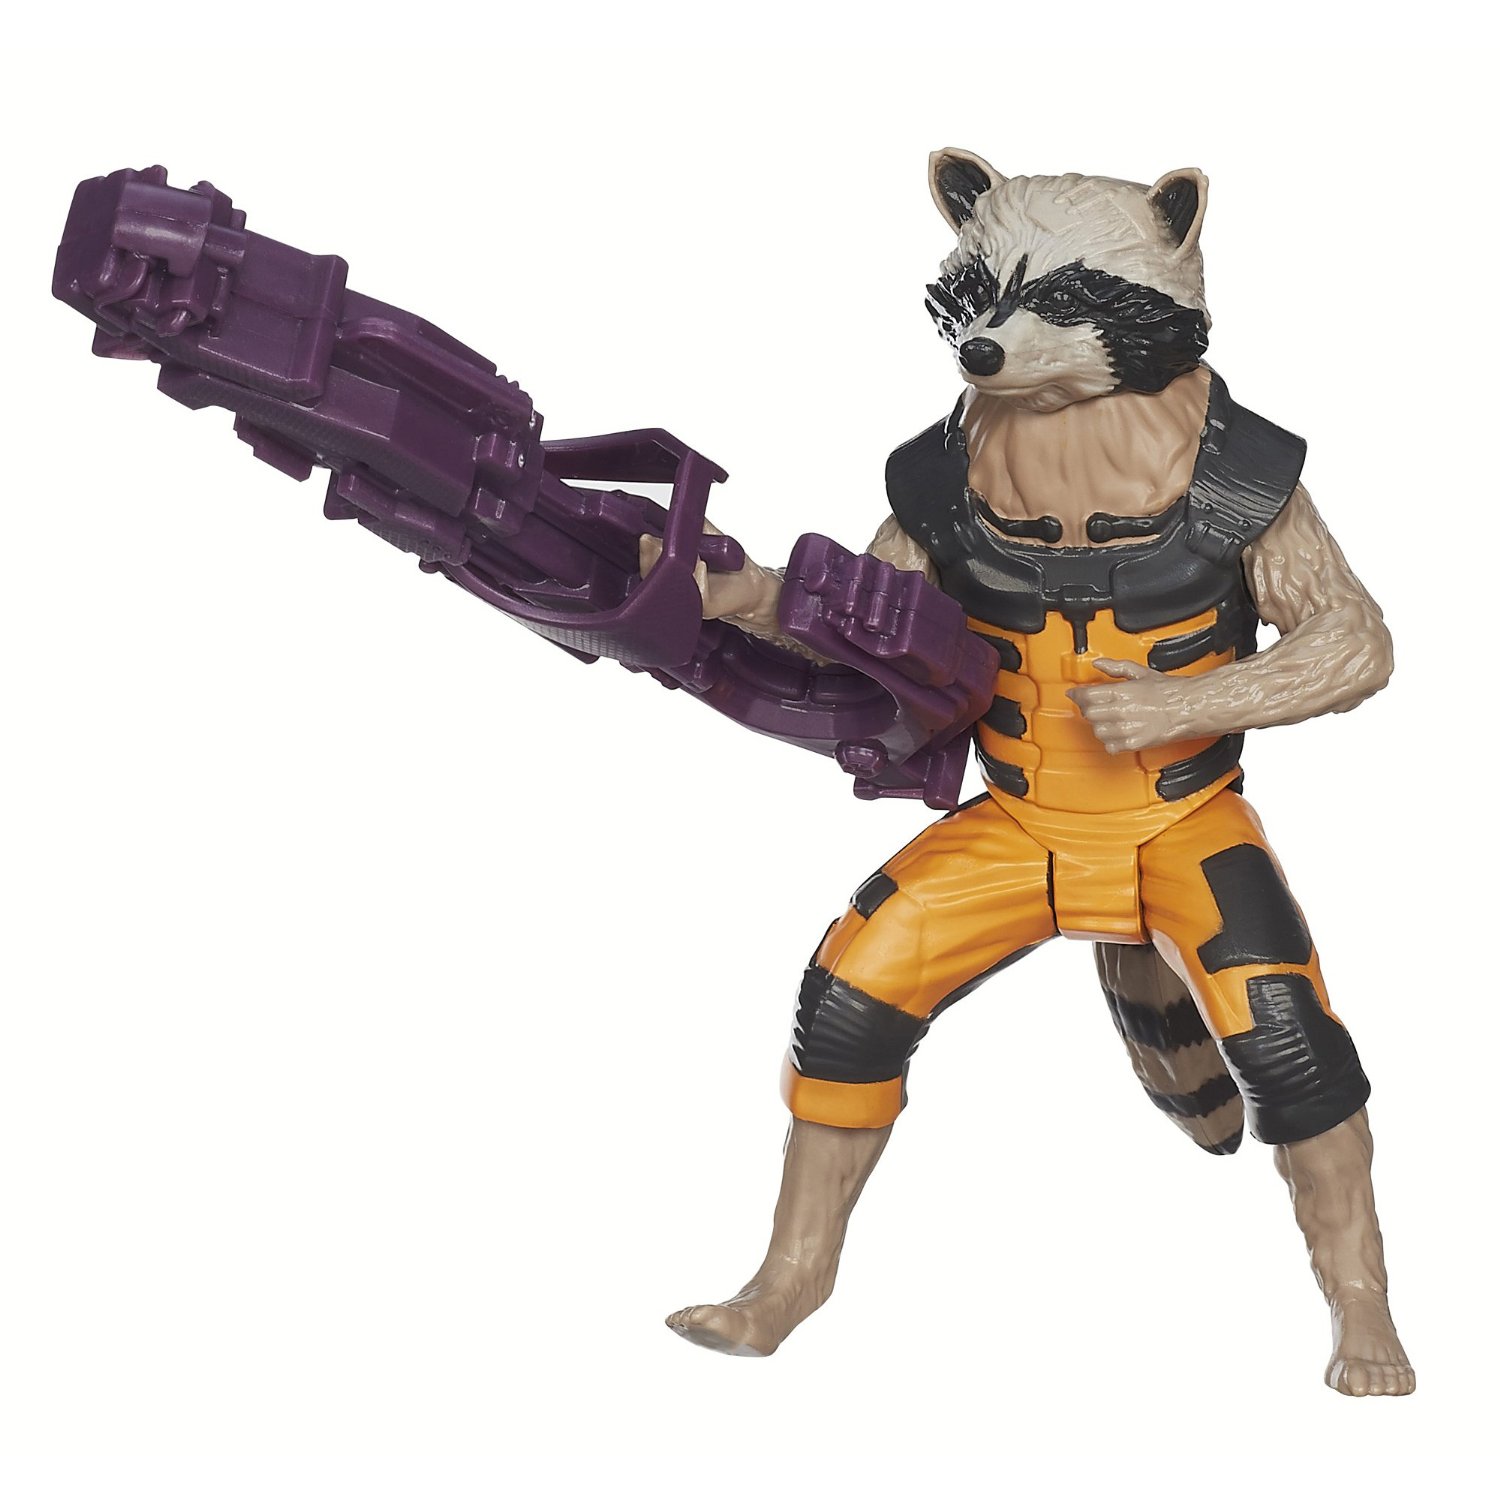 Marvel Guardians of the Galaxy Titan Hero Series Rocket Raccoon Figure Only $6.02 (Reg. $12.99)